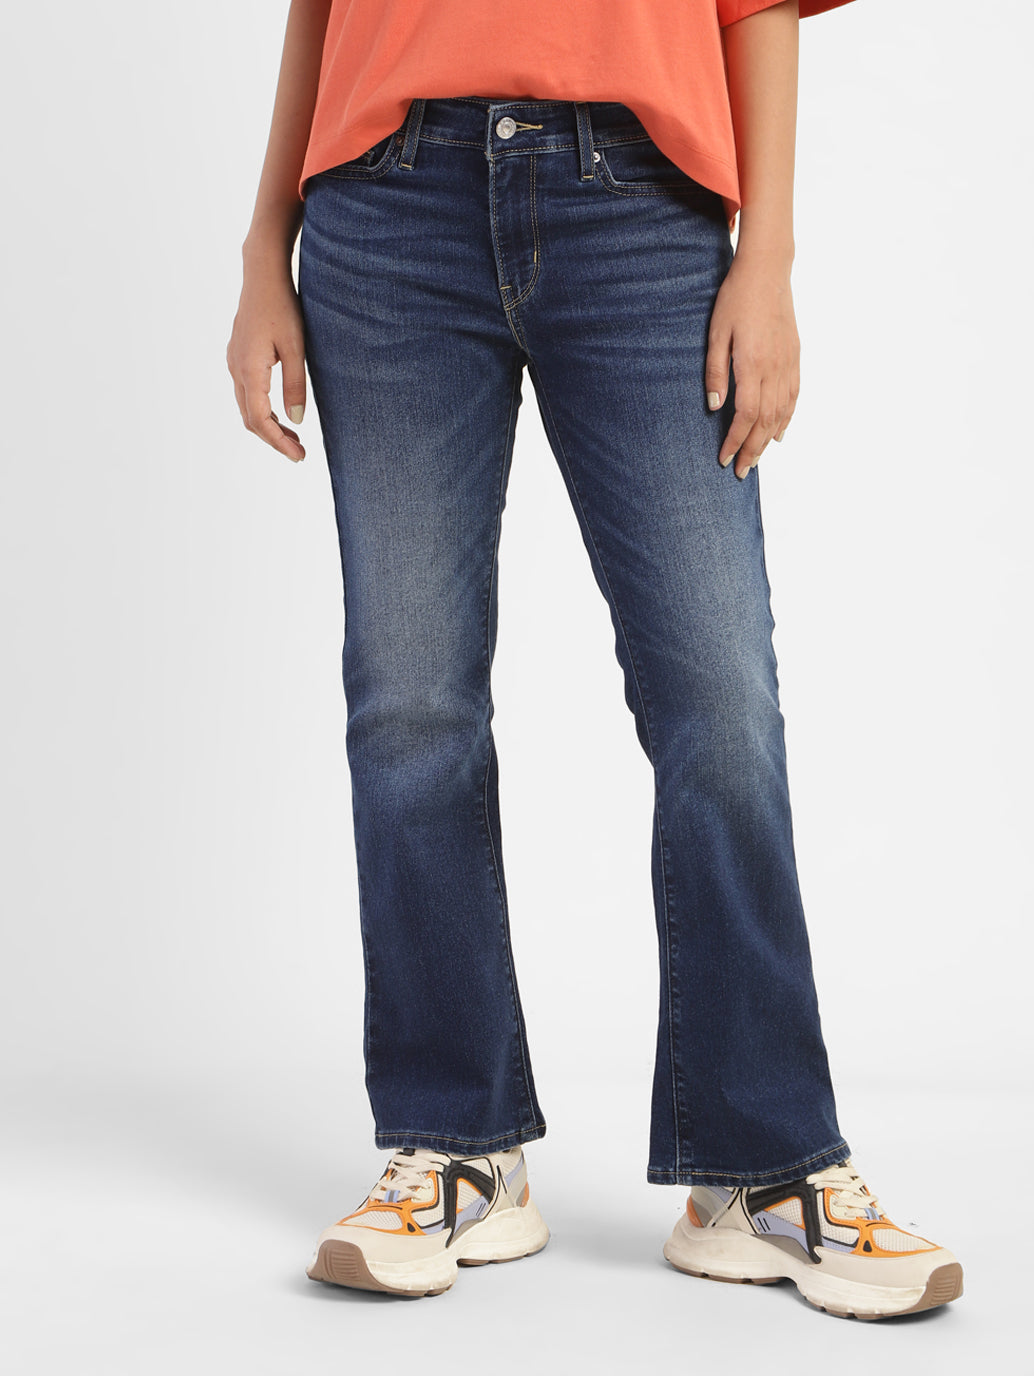 Women's 715 Bootcut Jeans